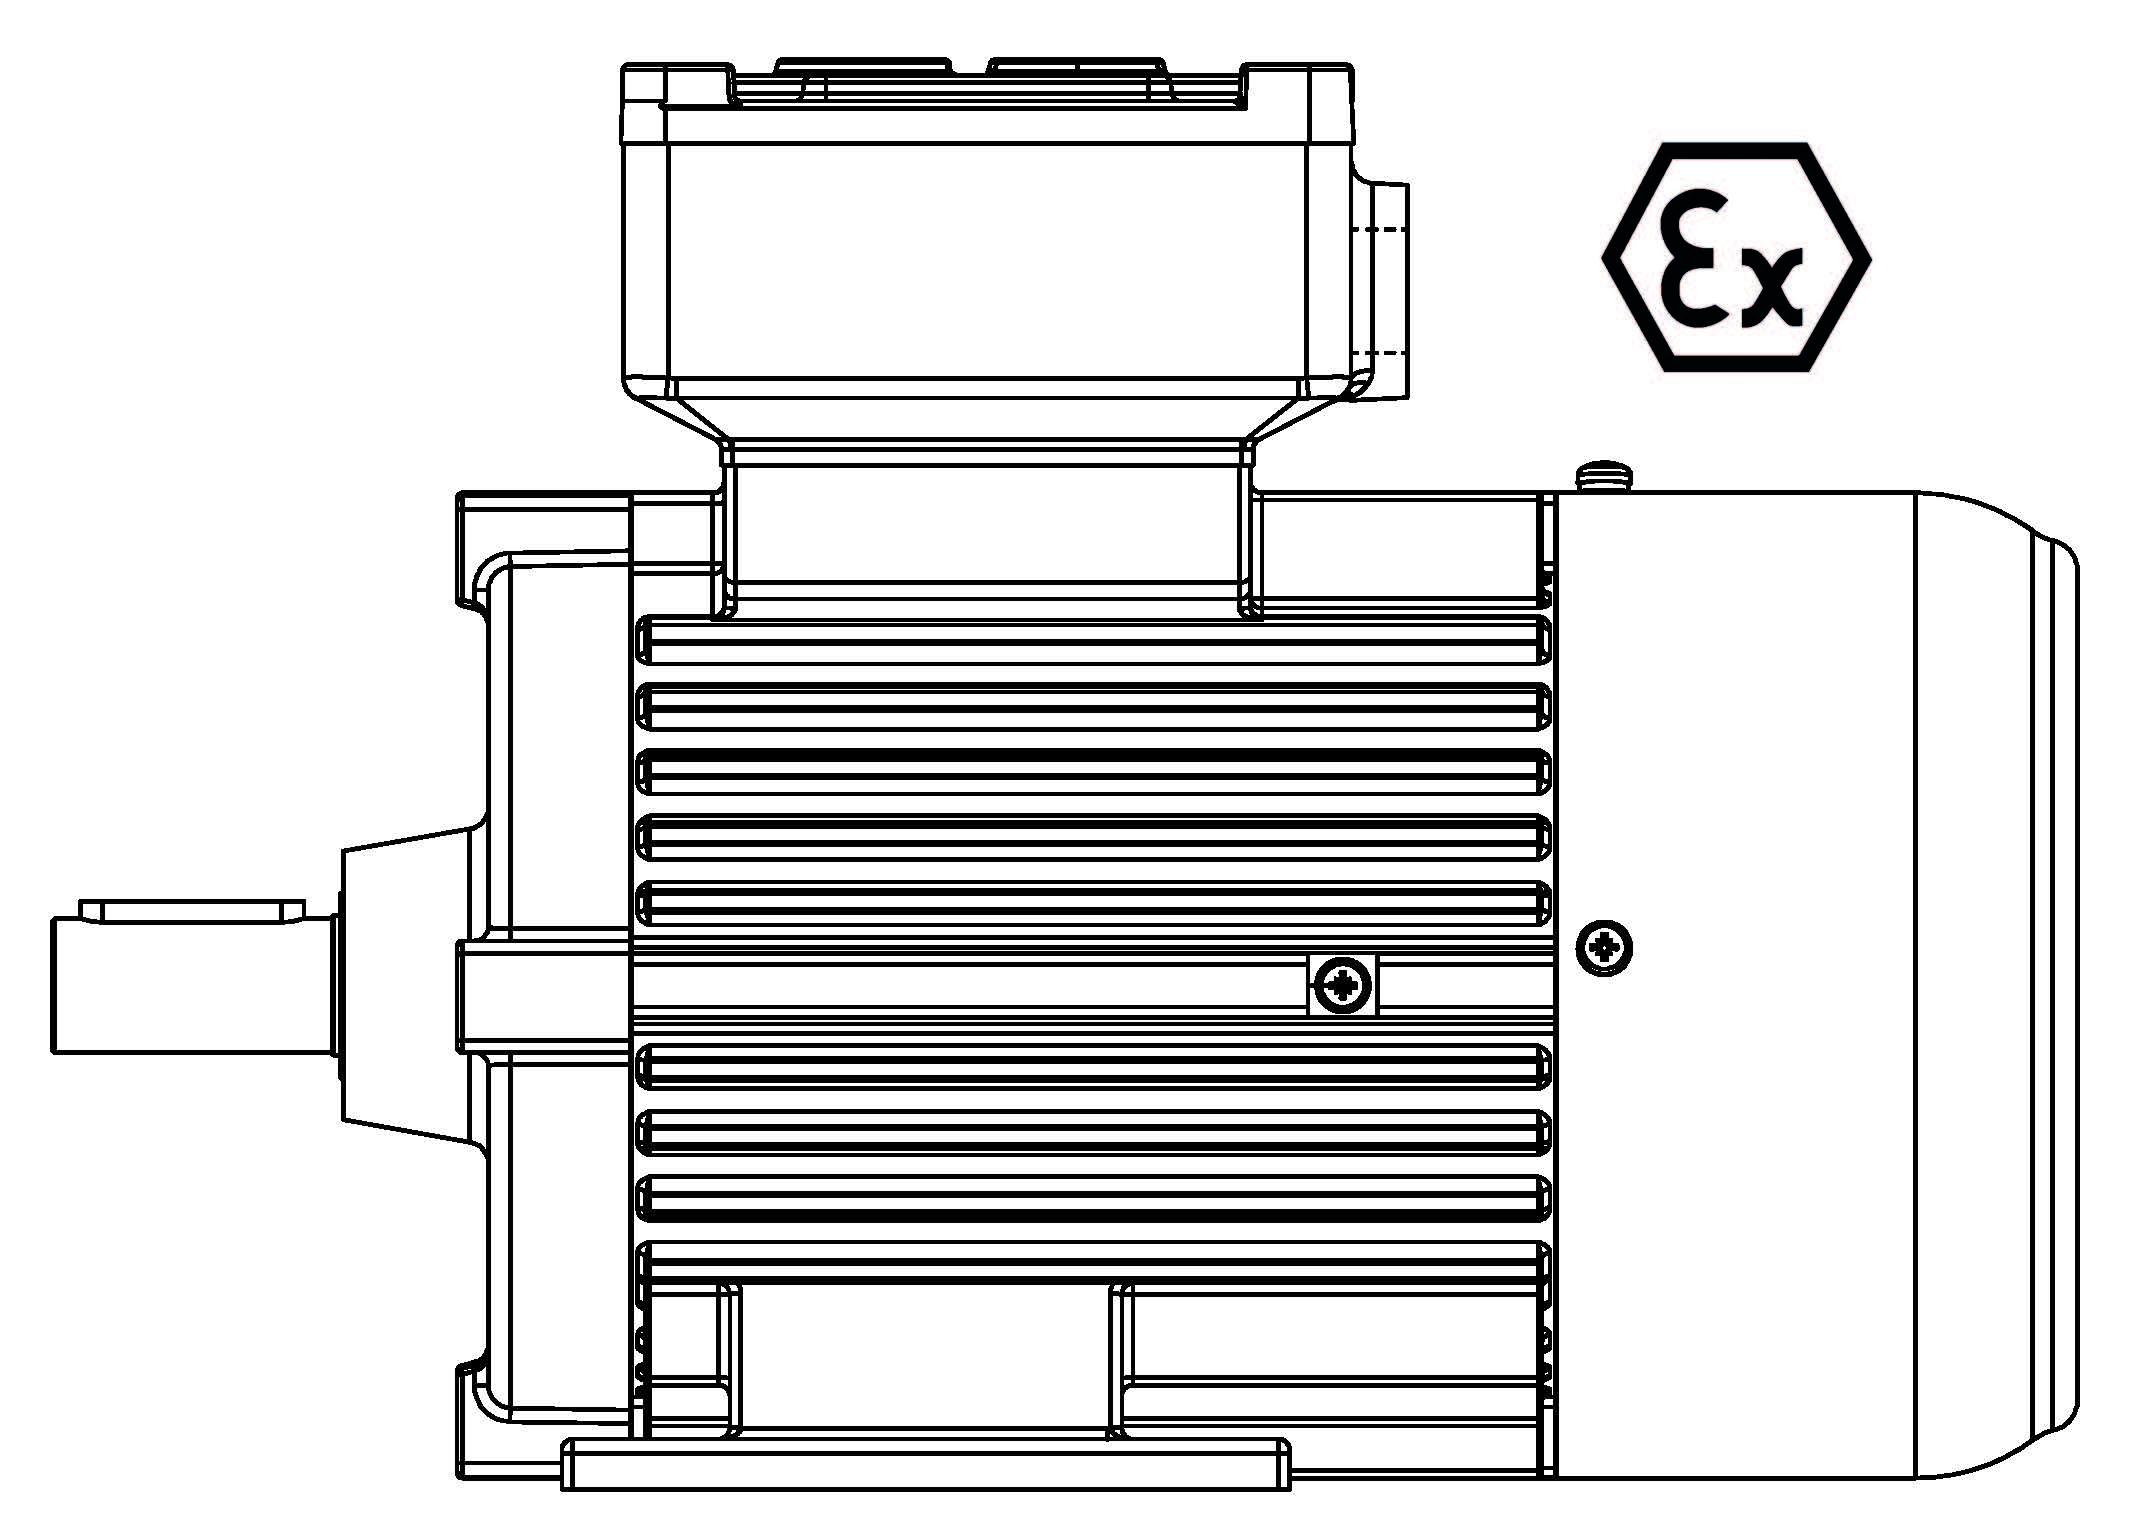 EX180L-4P22IM1081 ATEX-DIN180L-4 Эл.двигатель 22 кВт 1450 об/мин 380/3/50 IM1081 IP55 ExdIIBT4